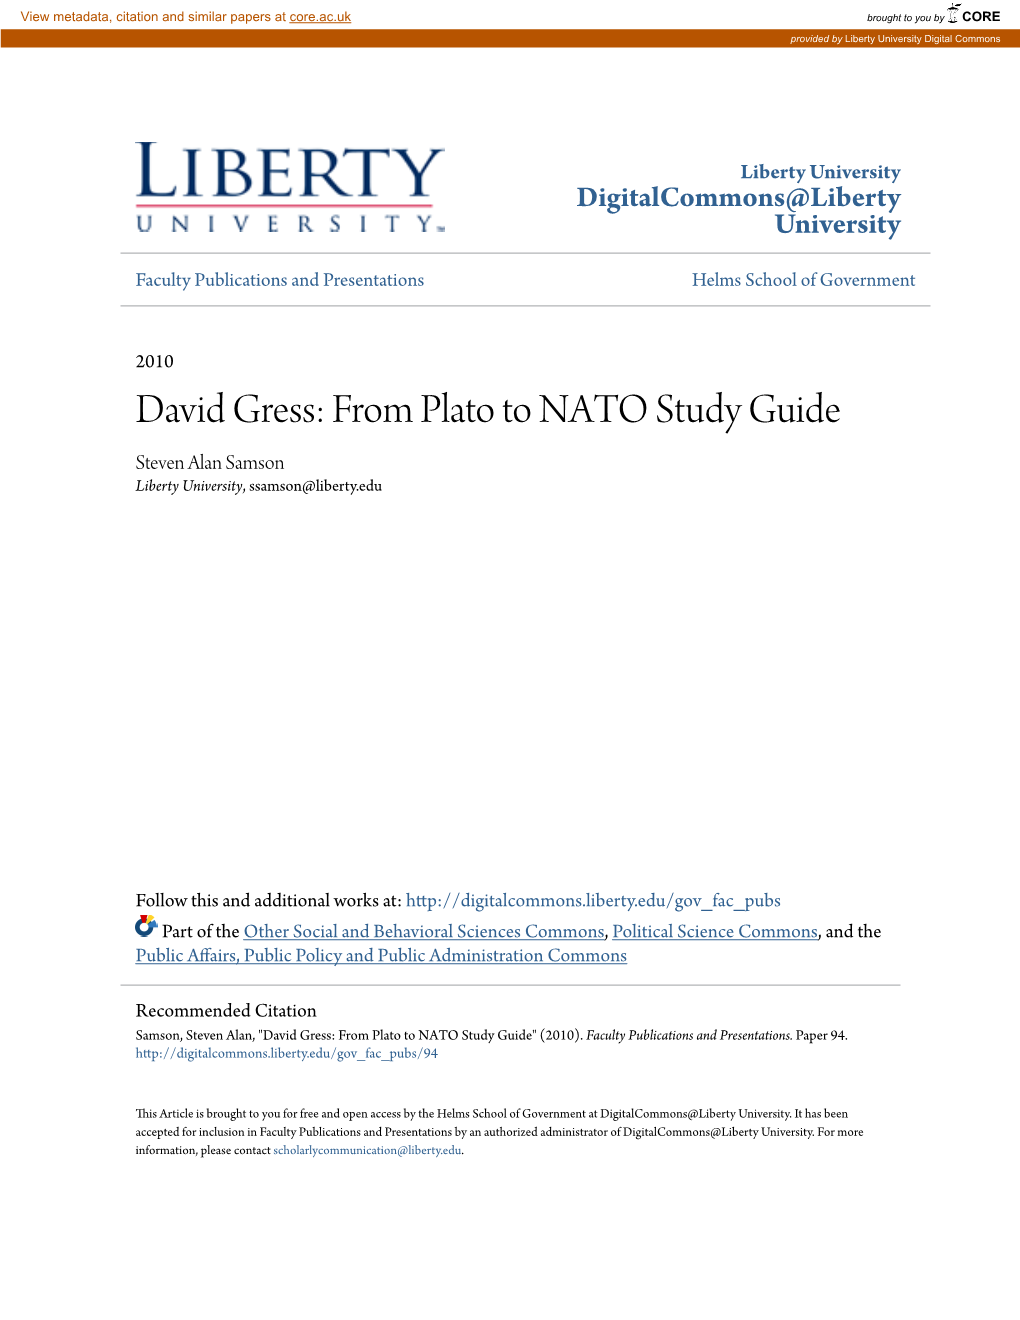 David Gress: from Plato to NATO Study Guide Steven Alan Samson Liberty University, Ssamson@Liberty.Edu